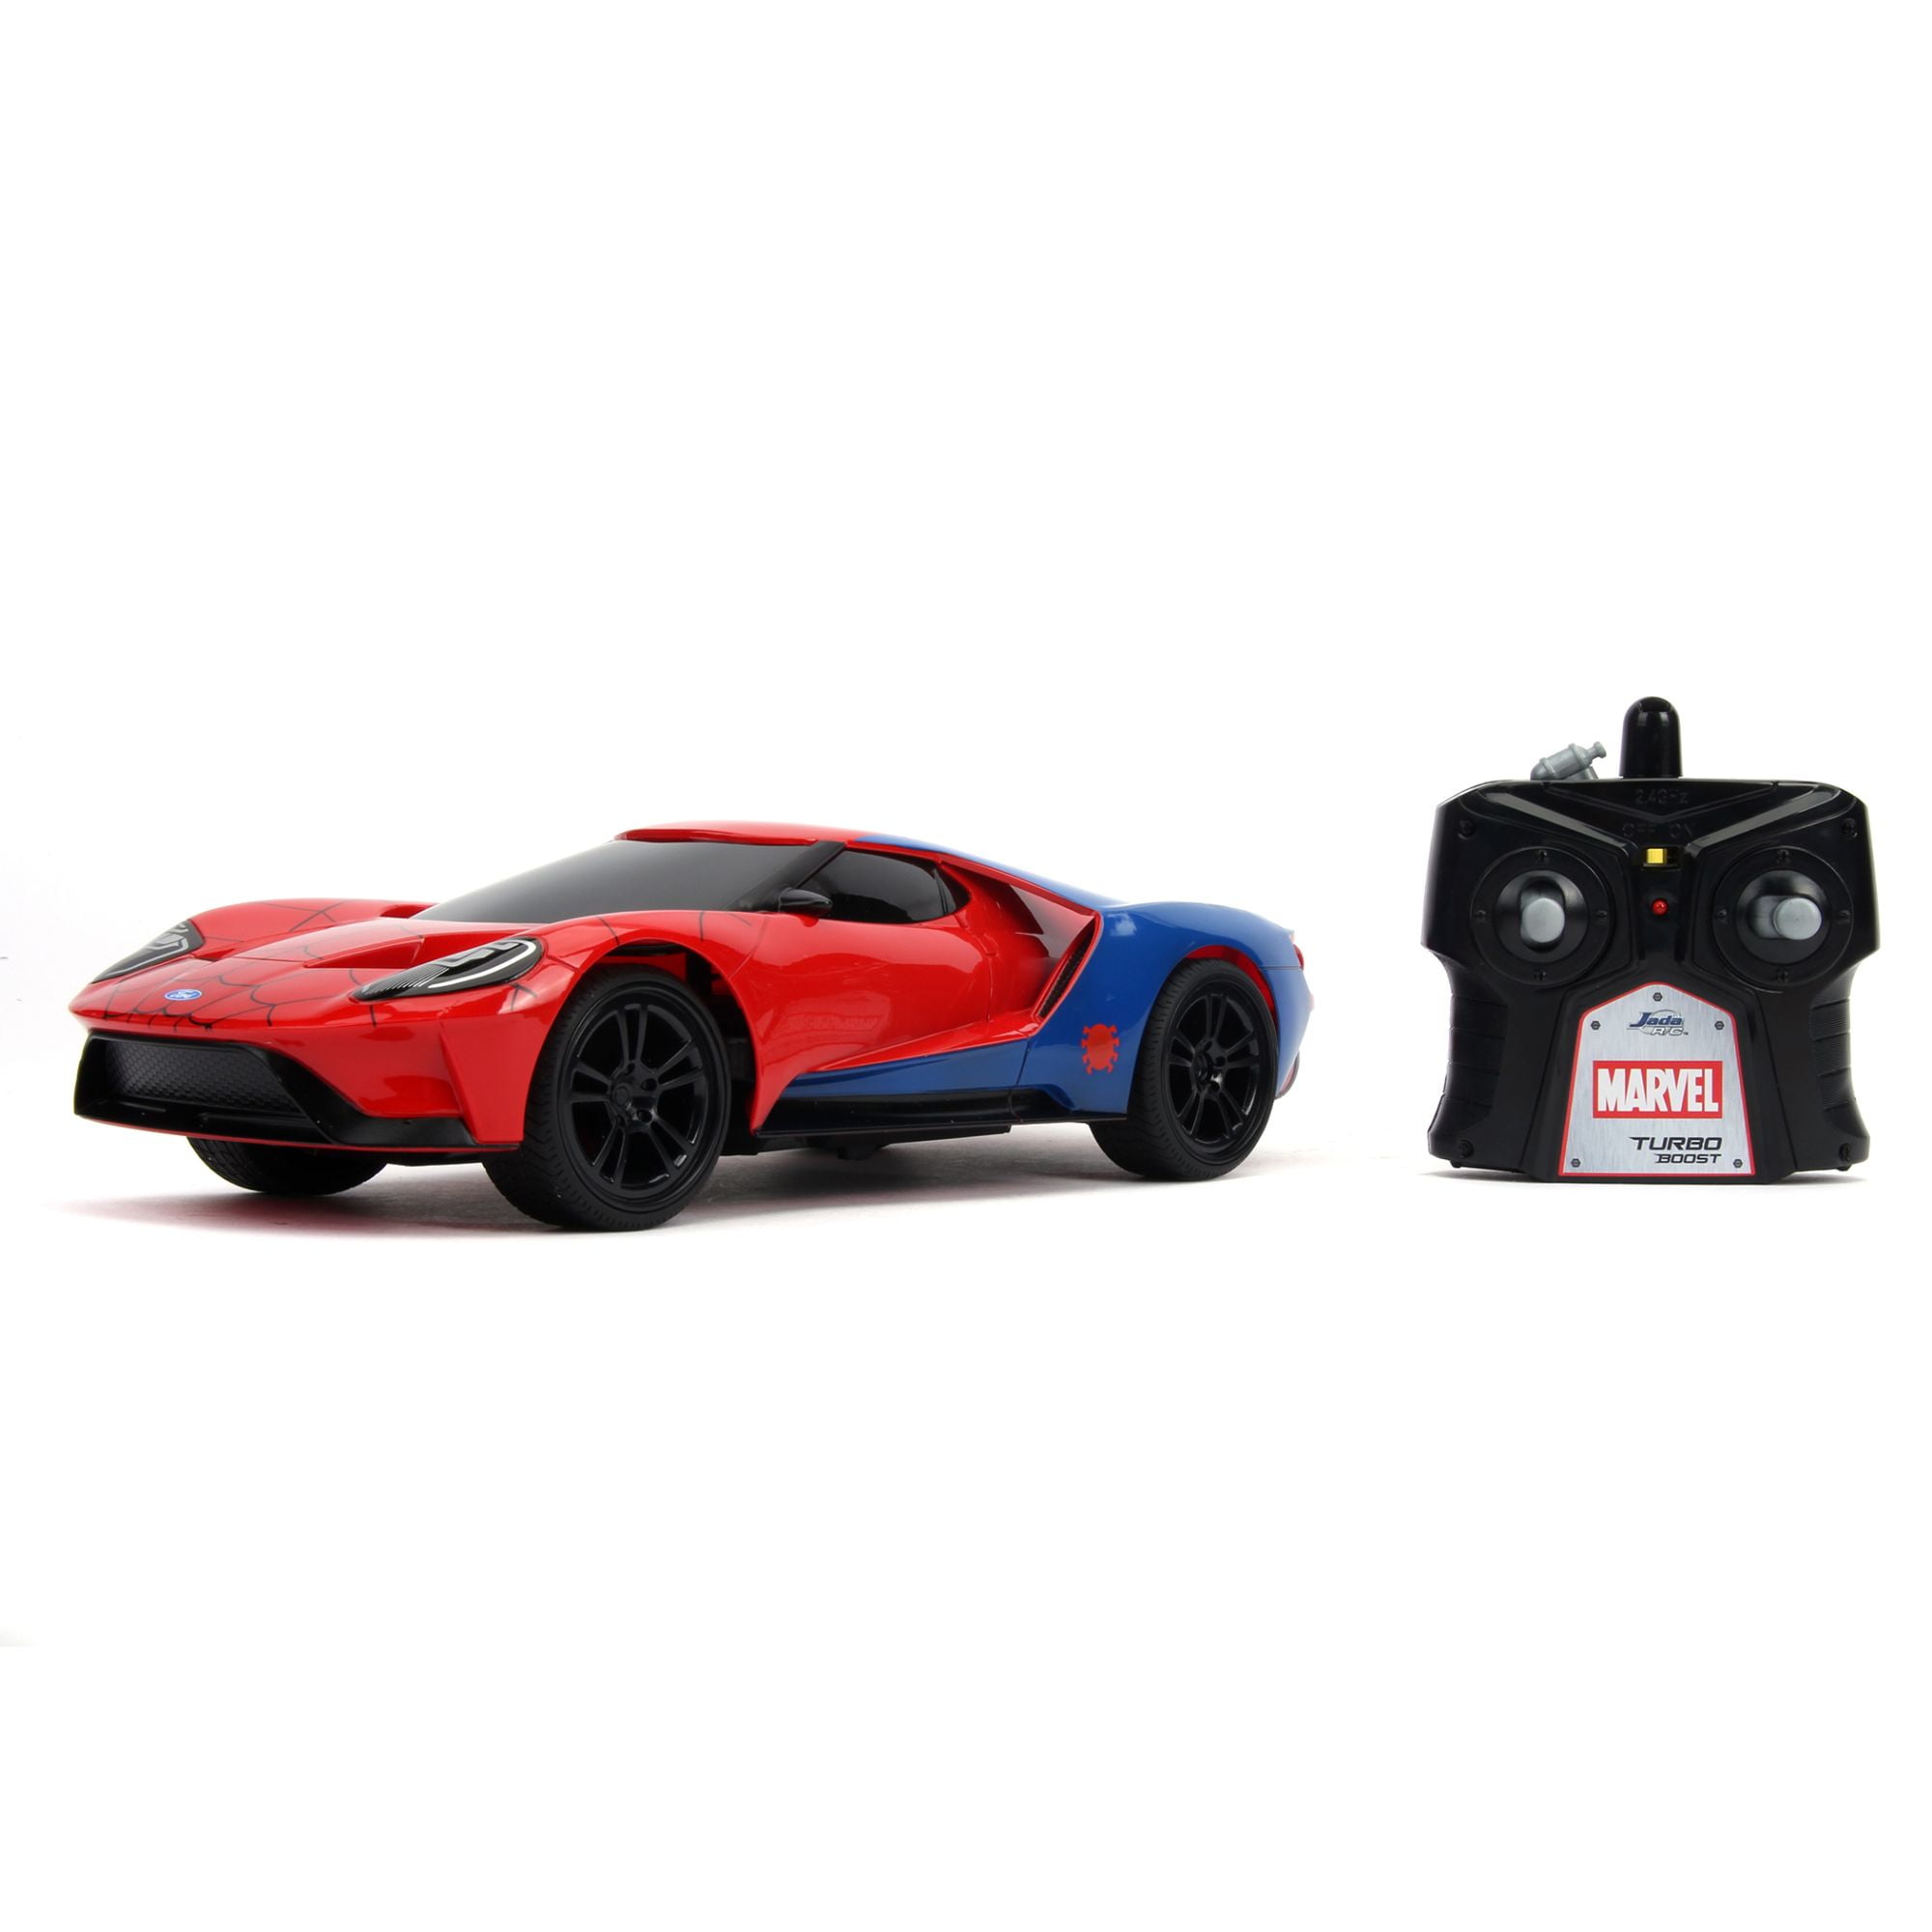 Jada Toys - Hollywood Rides 1:16 Spiderman Ford GT R/C